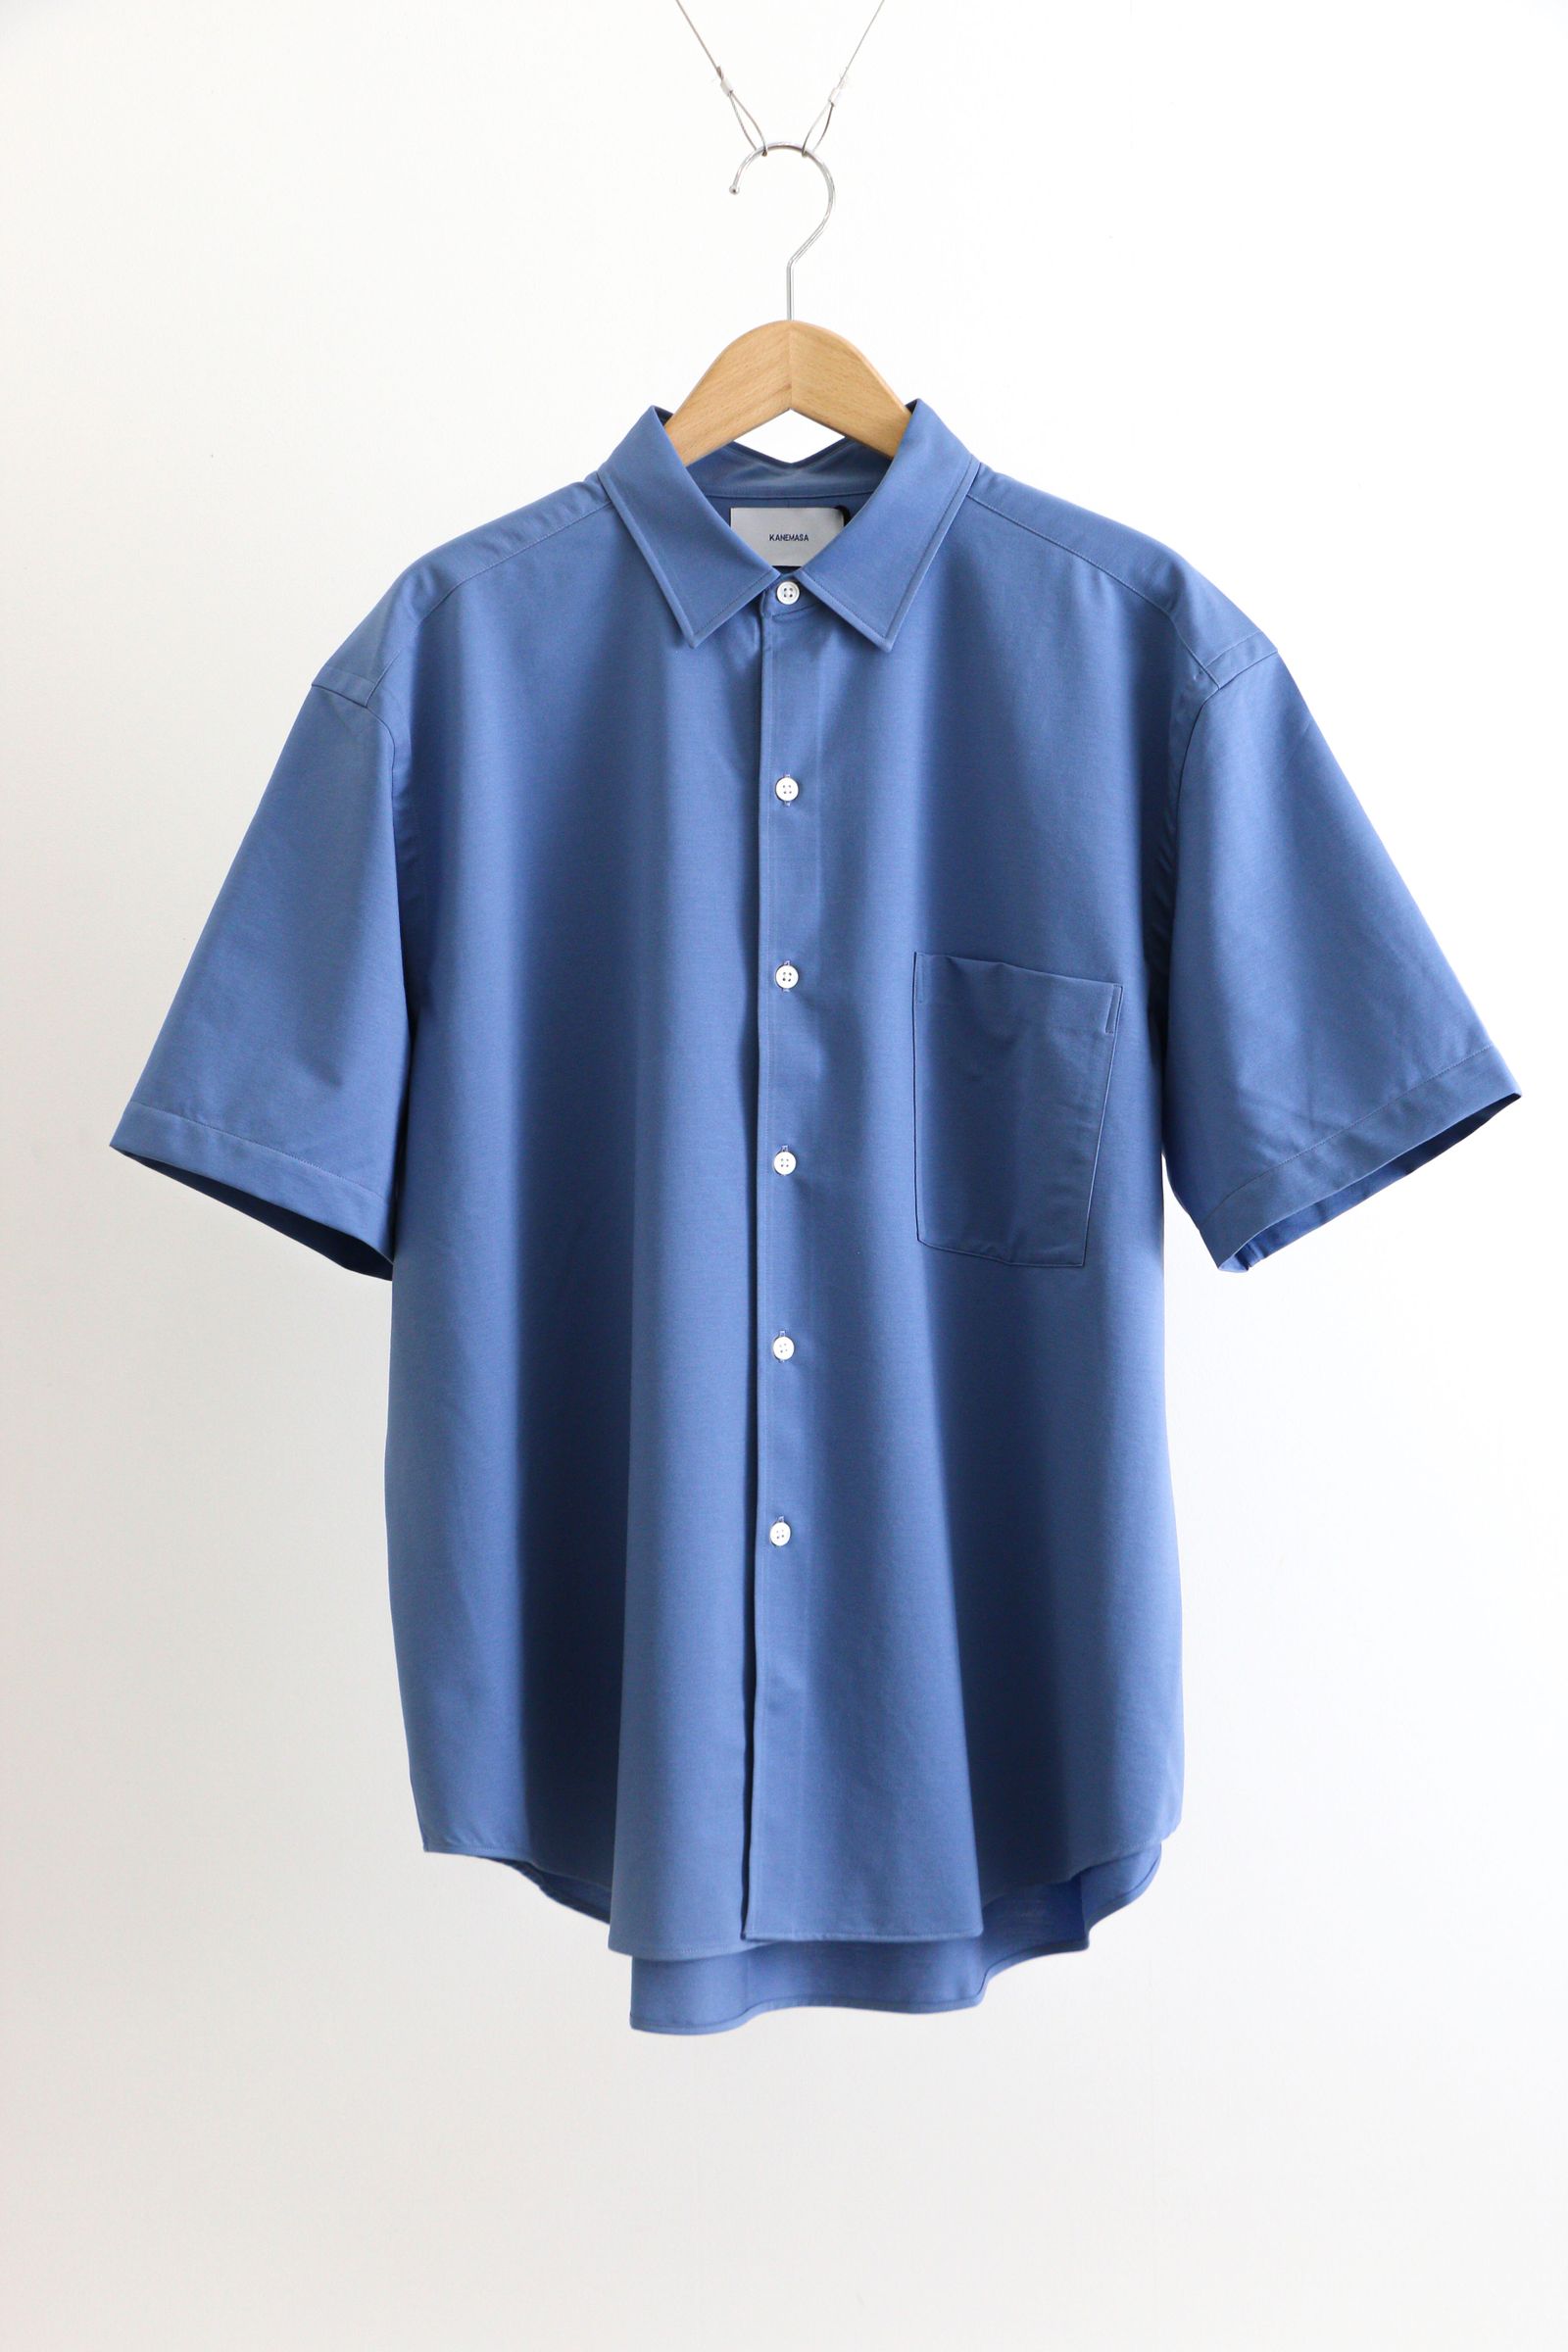 Royal Ox Dress Jersey Short Sleeve Shirt ULTRAMARINE / ショートスリーブシャツ / 半袖シャツ  / - 2